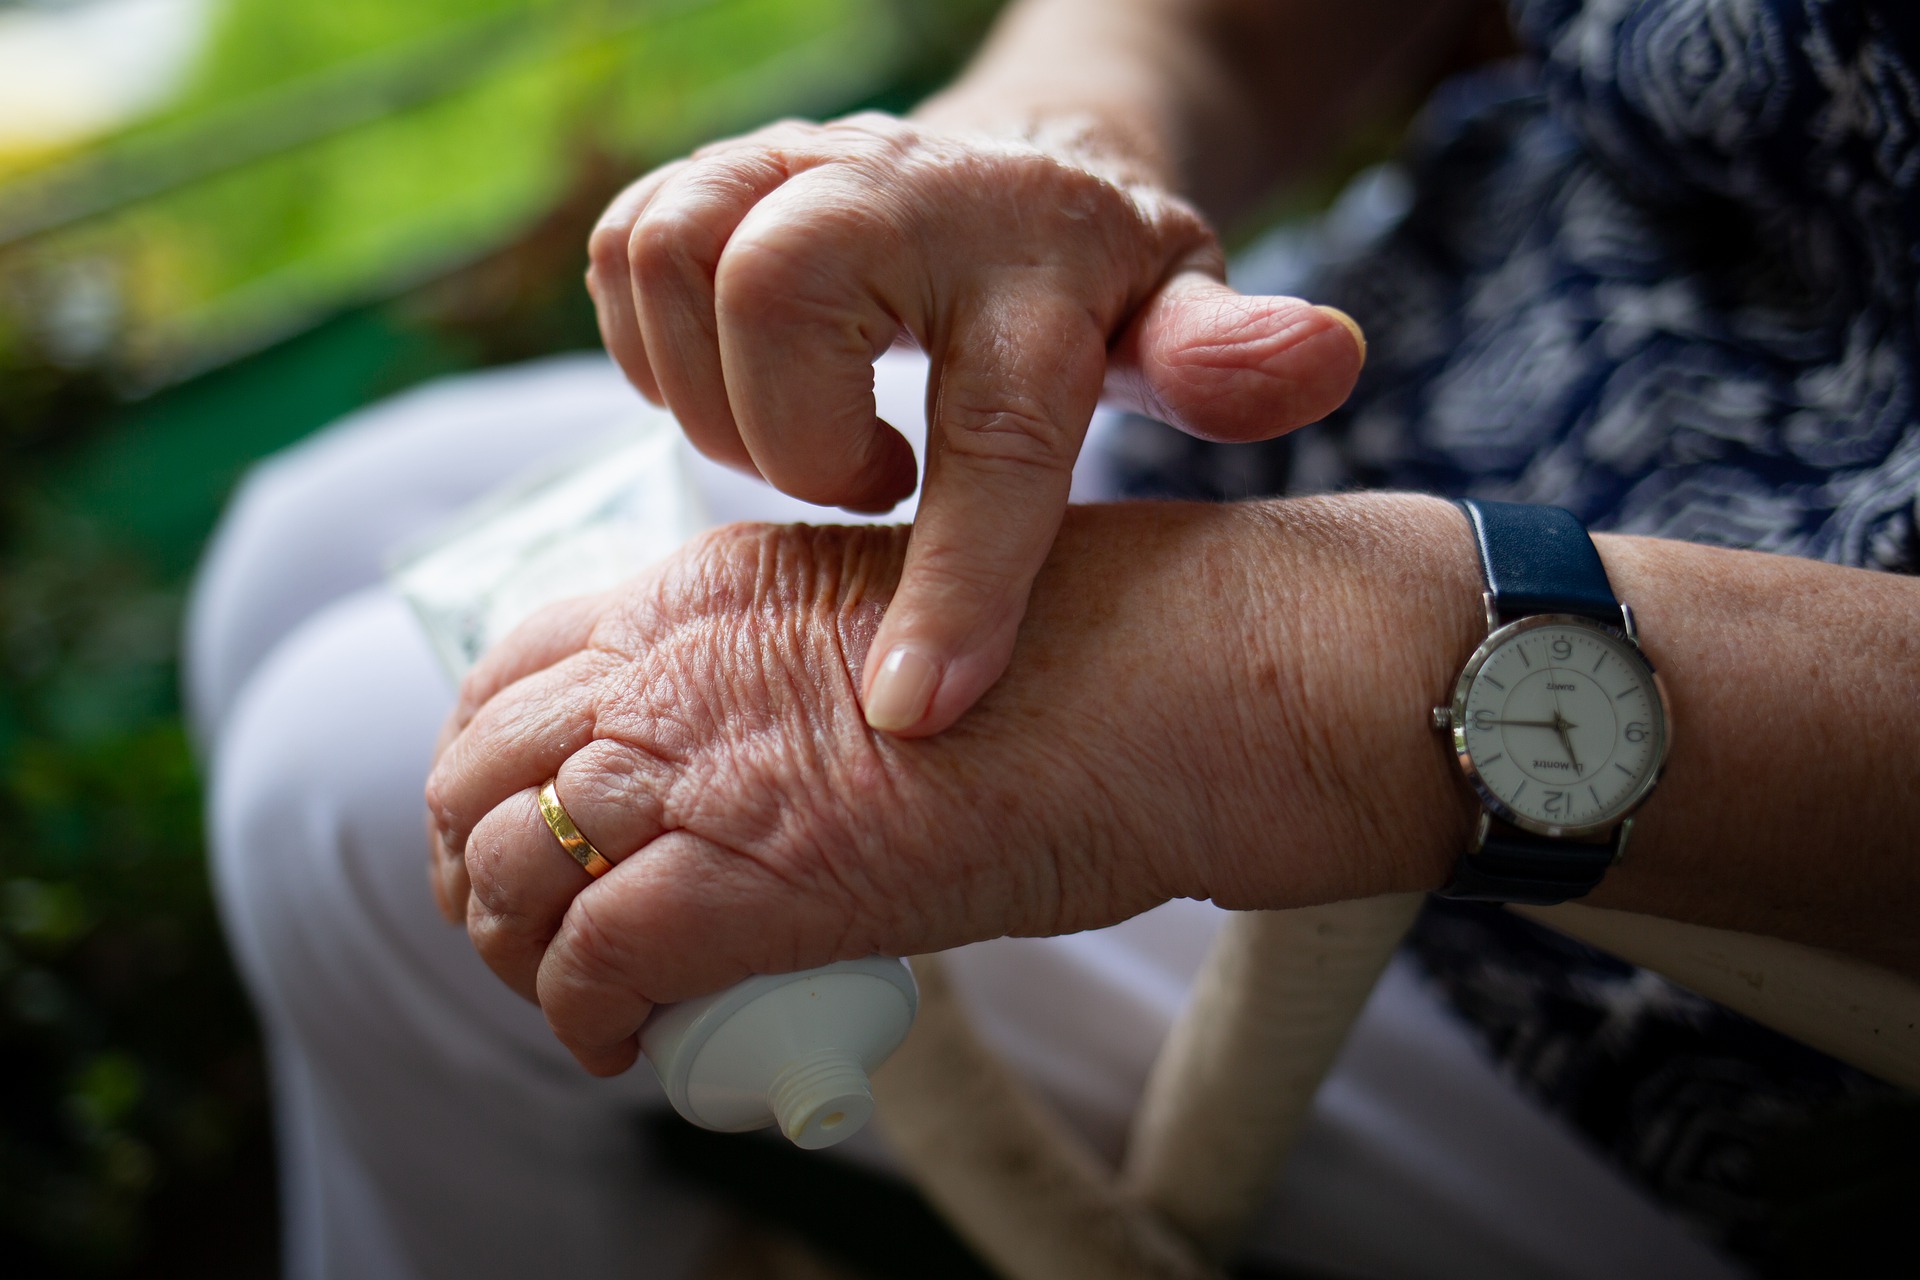 Rheumatoid arthritis can qualify you for Social Security Disability benefits